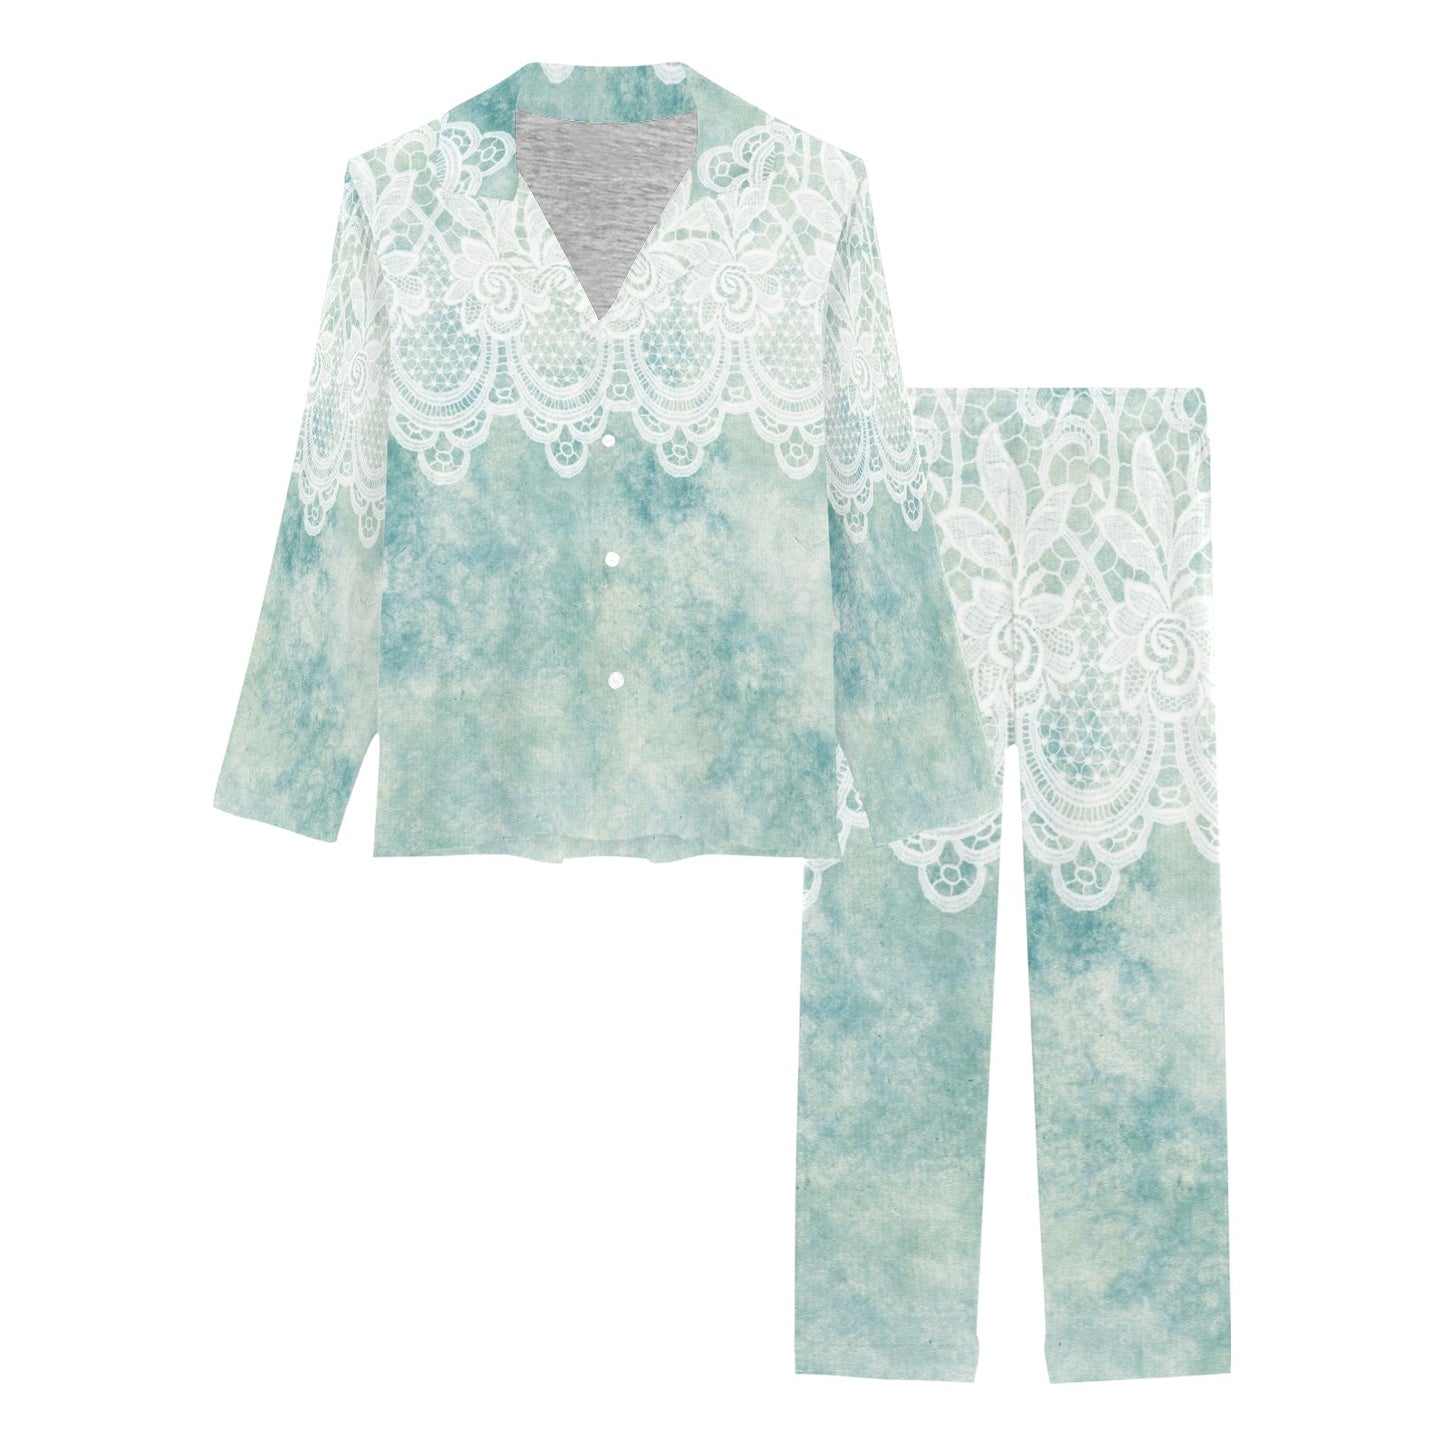 Victorian printed lace pajama set, design 41 Women's Long Pajama Set (Sets 02)